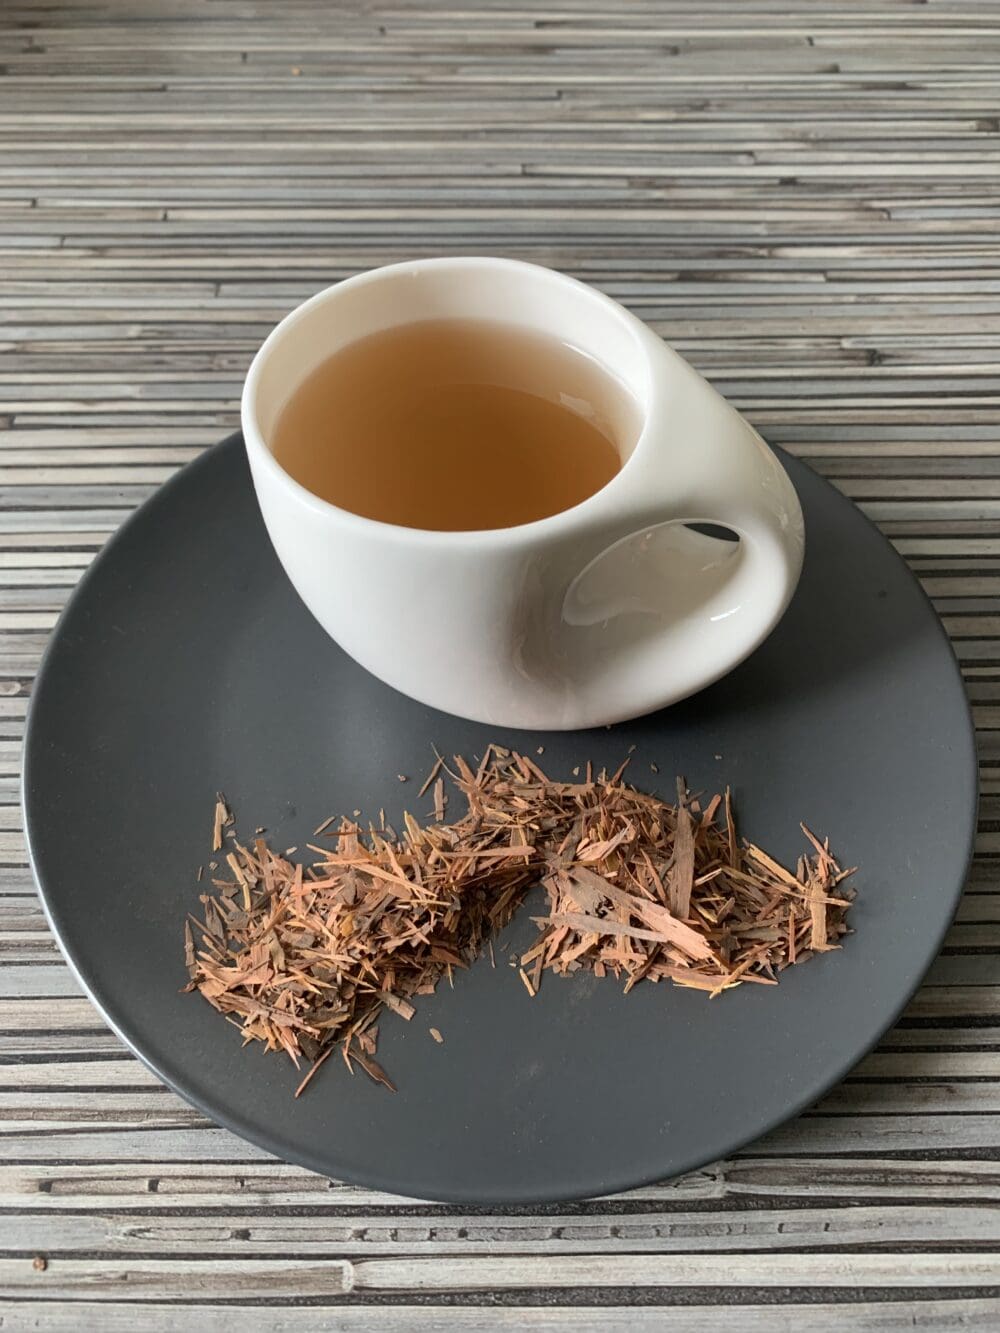 Lapacho Tajy Tee aus Südamerika kräutertee südamerika paraguay teesorte